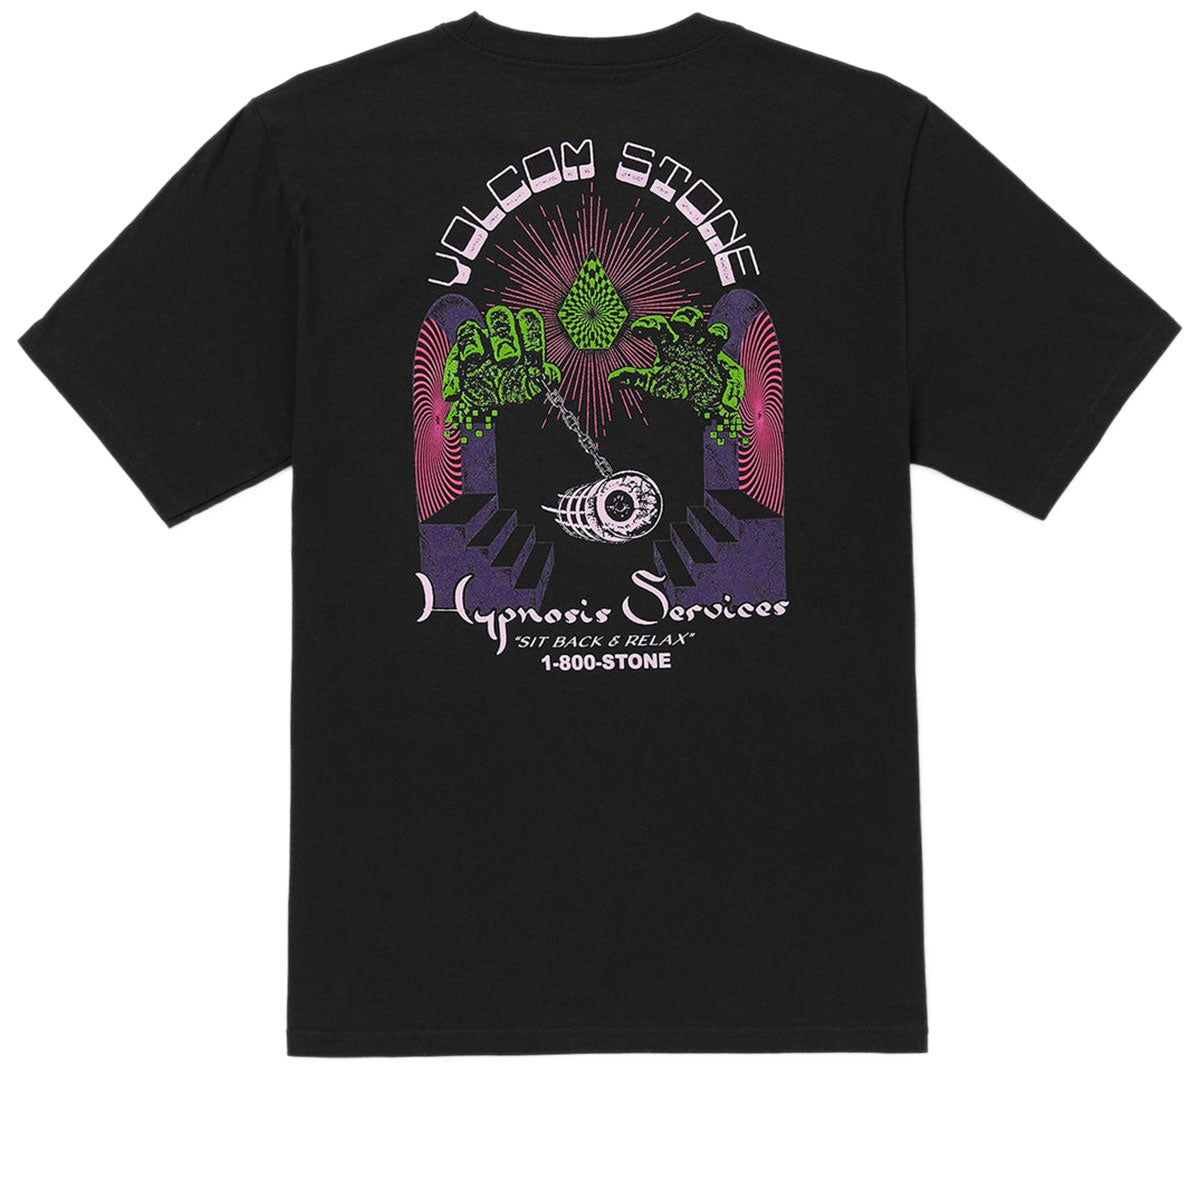 Volcom 1800 Stone T-Shirt - Black image 1